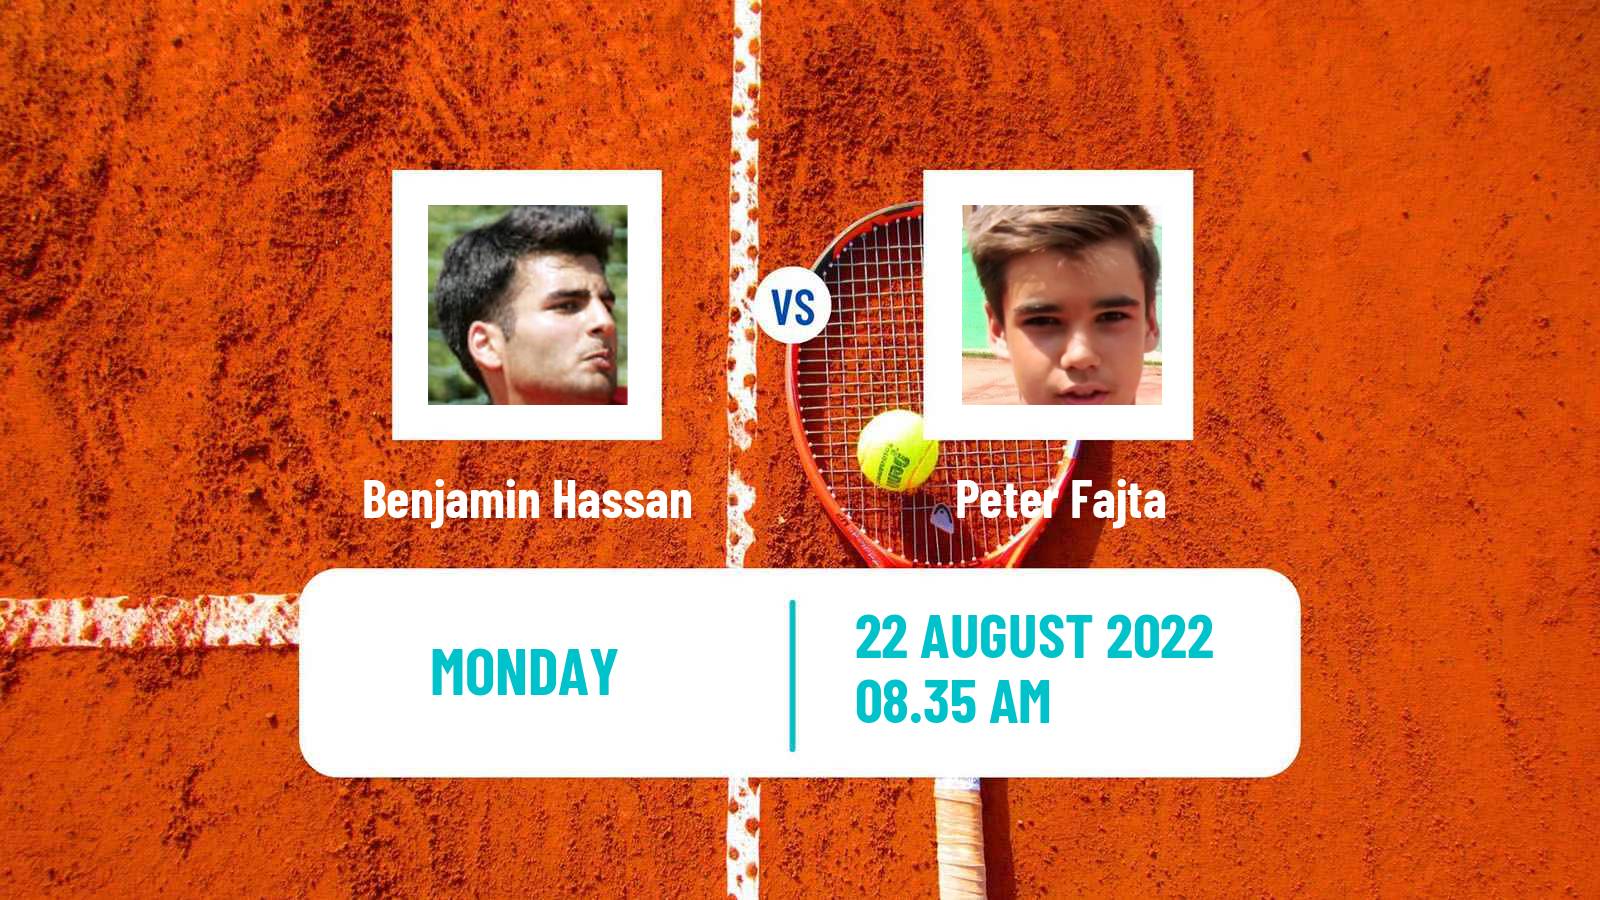 Tennis ATP Challenger Benjamin Hassan - Peter Fajta